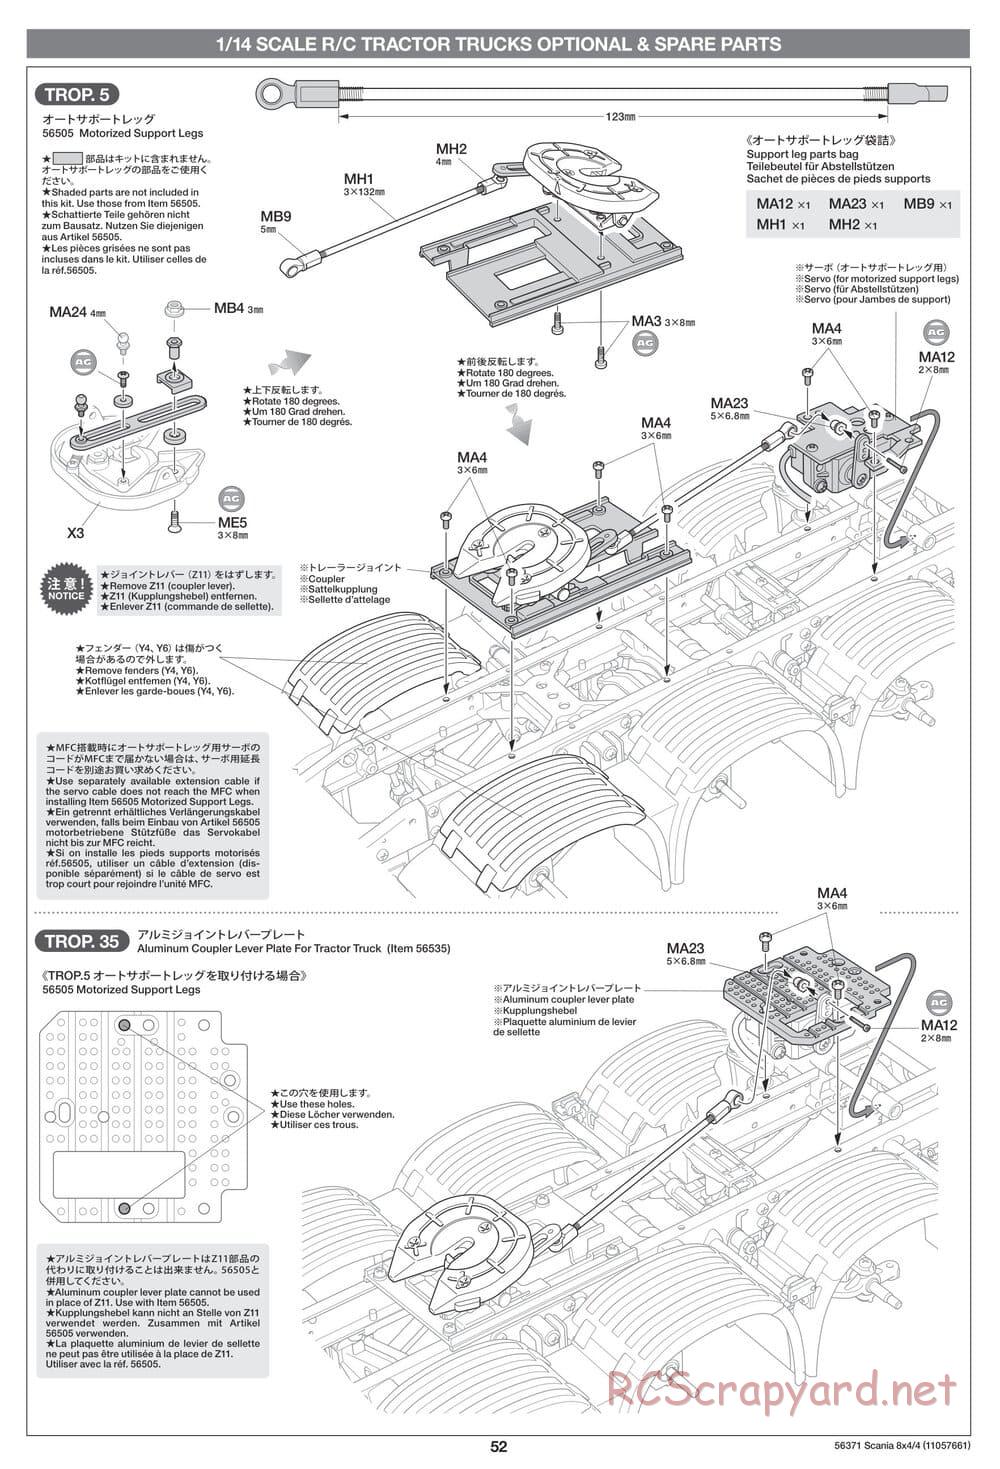 Tamiya - Scania 770 S 8x4/4 Chassis - Manual - Page 52